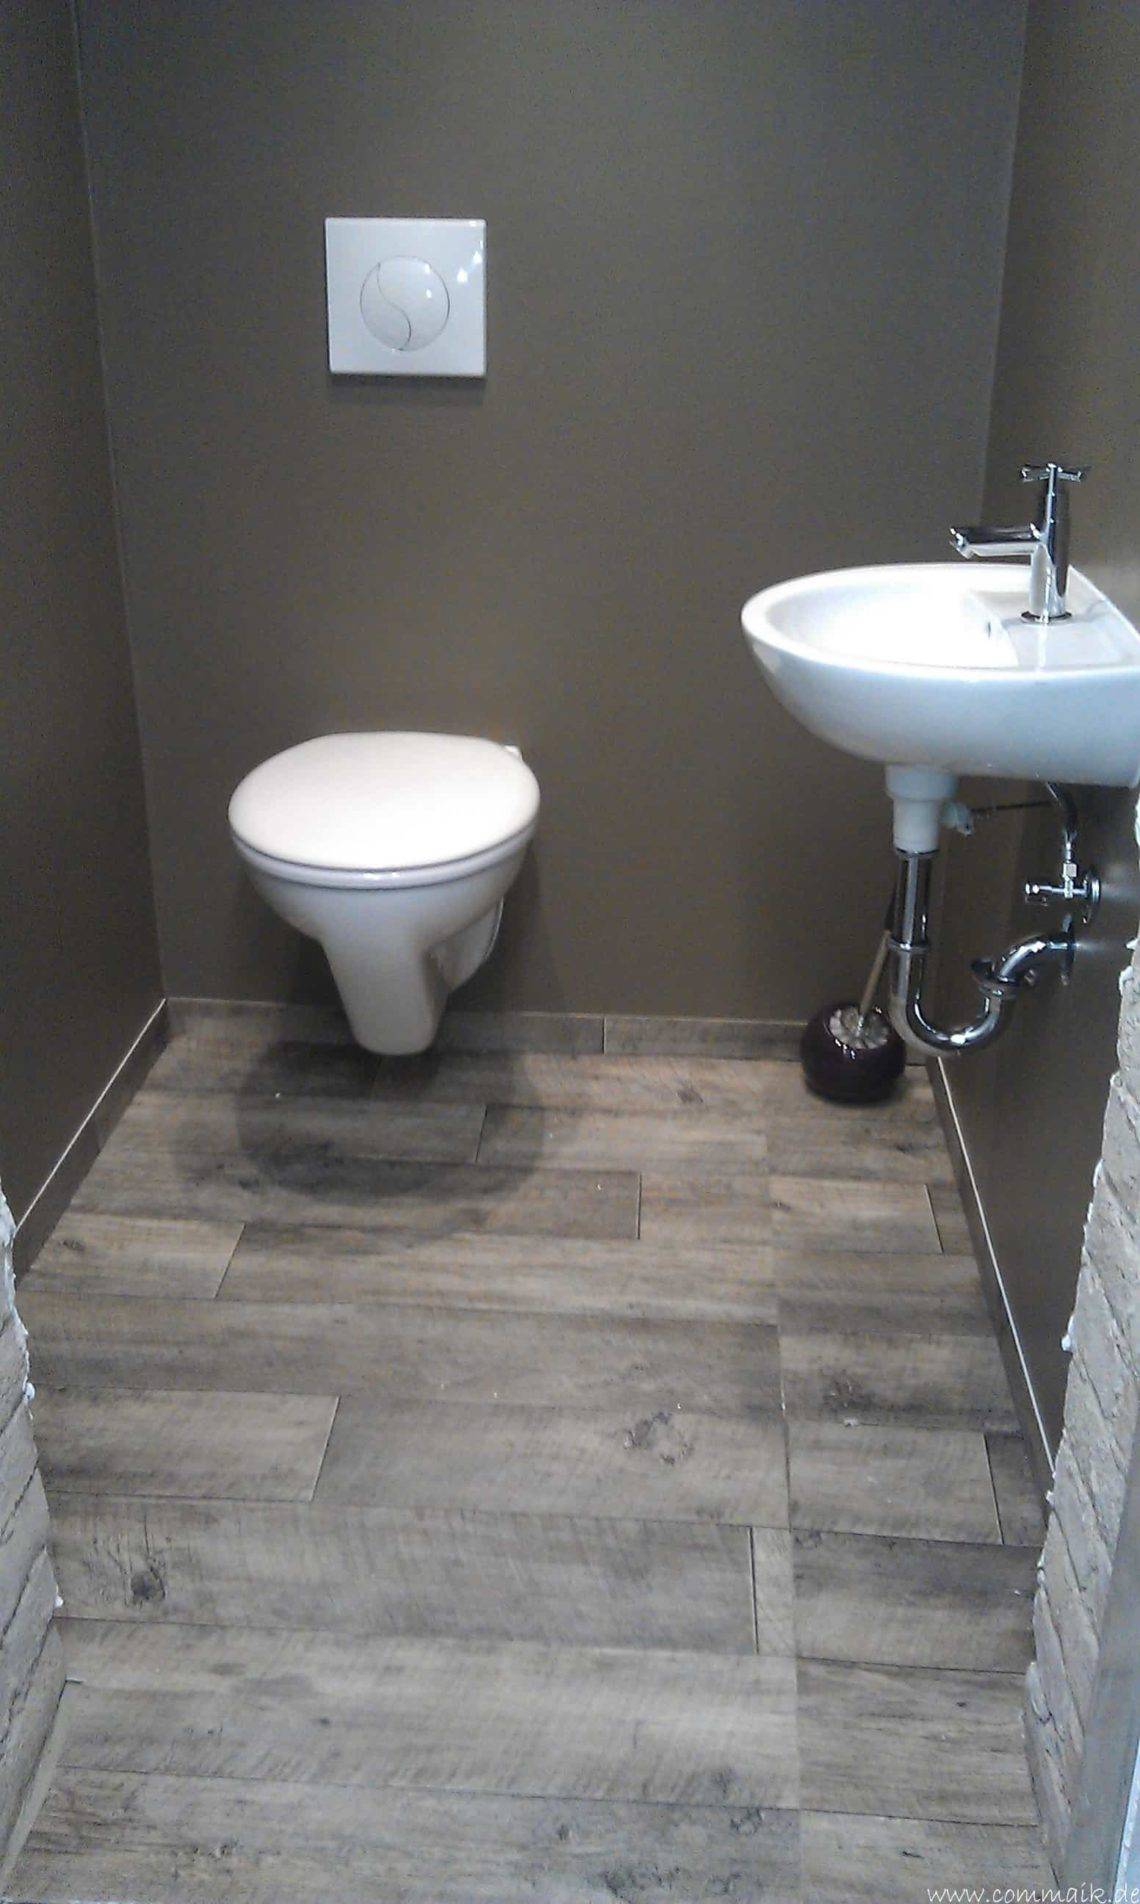 toilette im keller mit trockenbau 36 - Im Keller wird eine Toilette mit Trockenbau realisiert